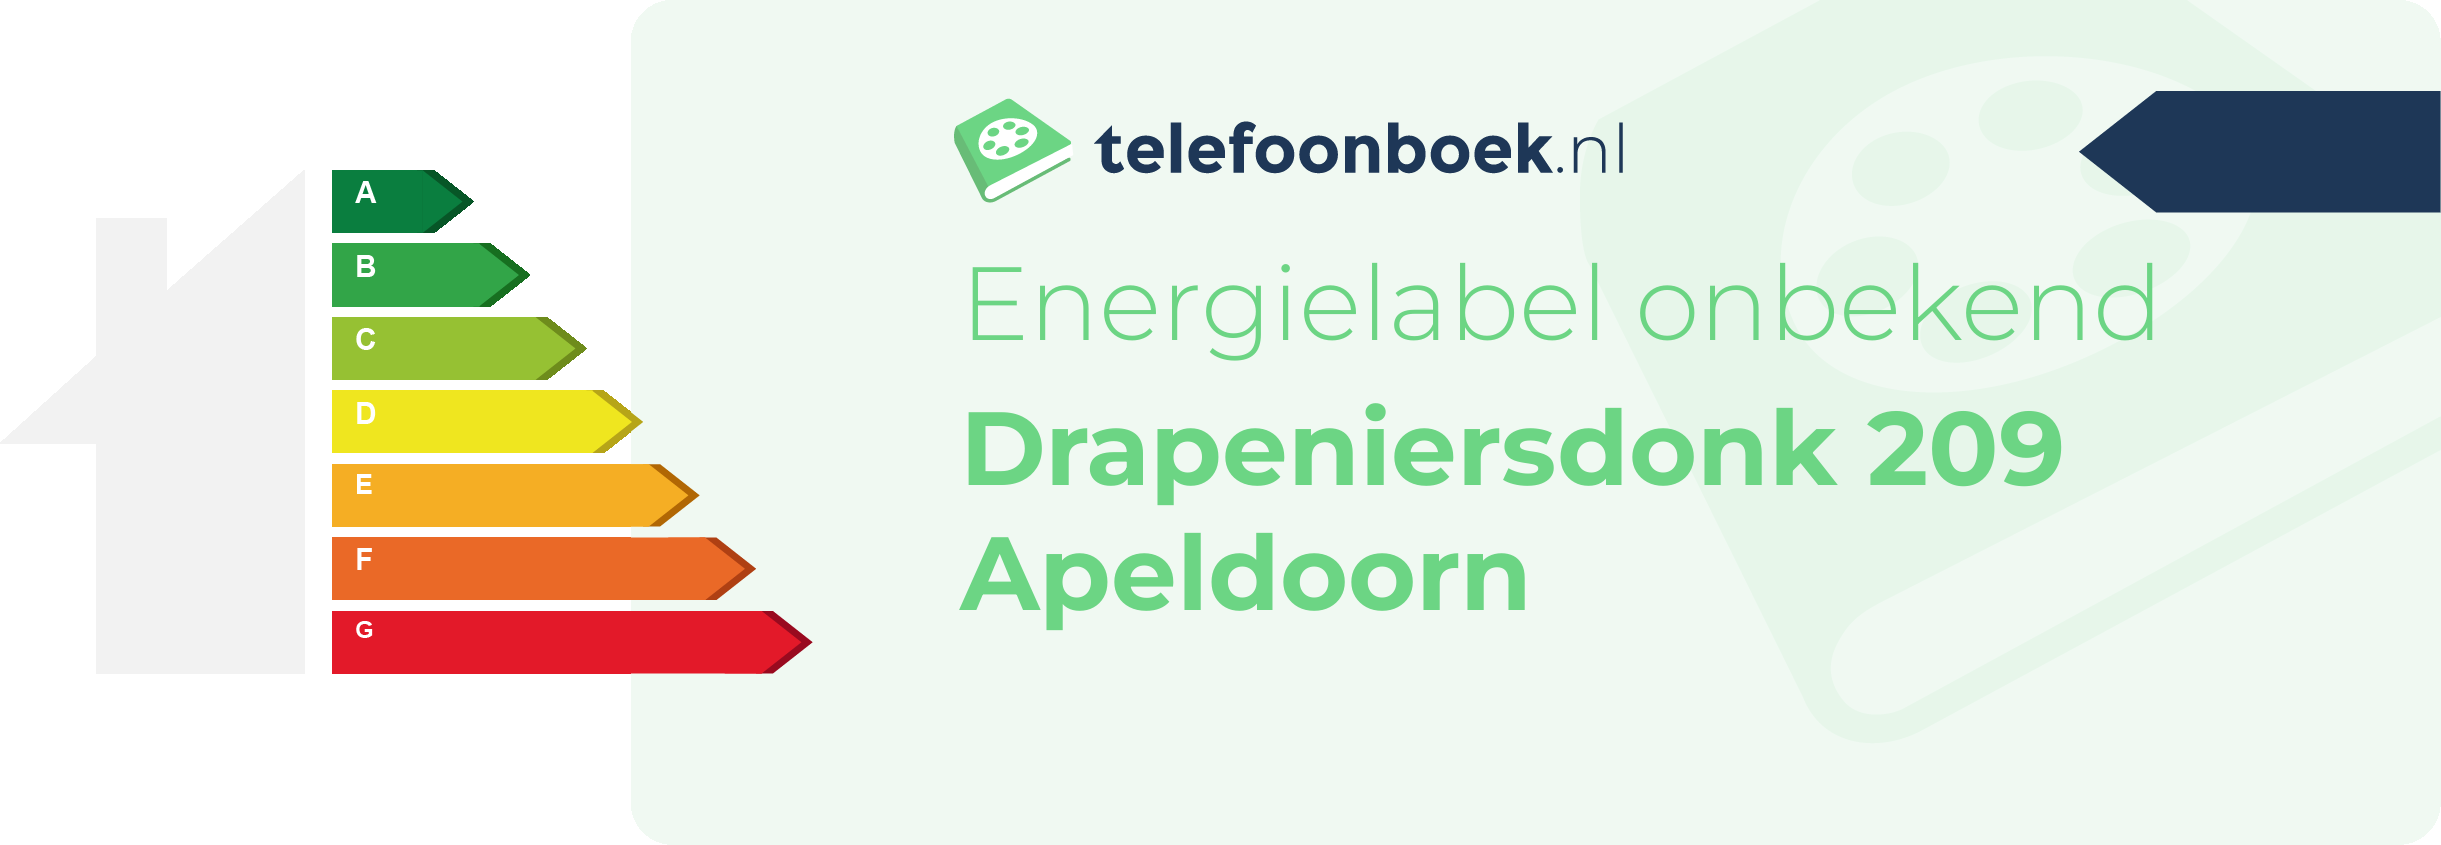 Energielabel Drapeniersdonk 209 Apeldoorn